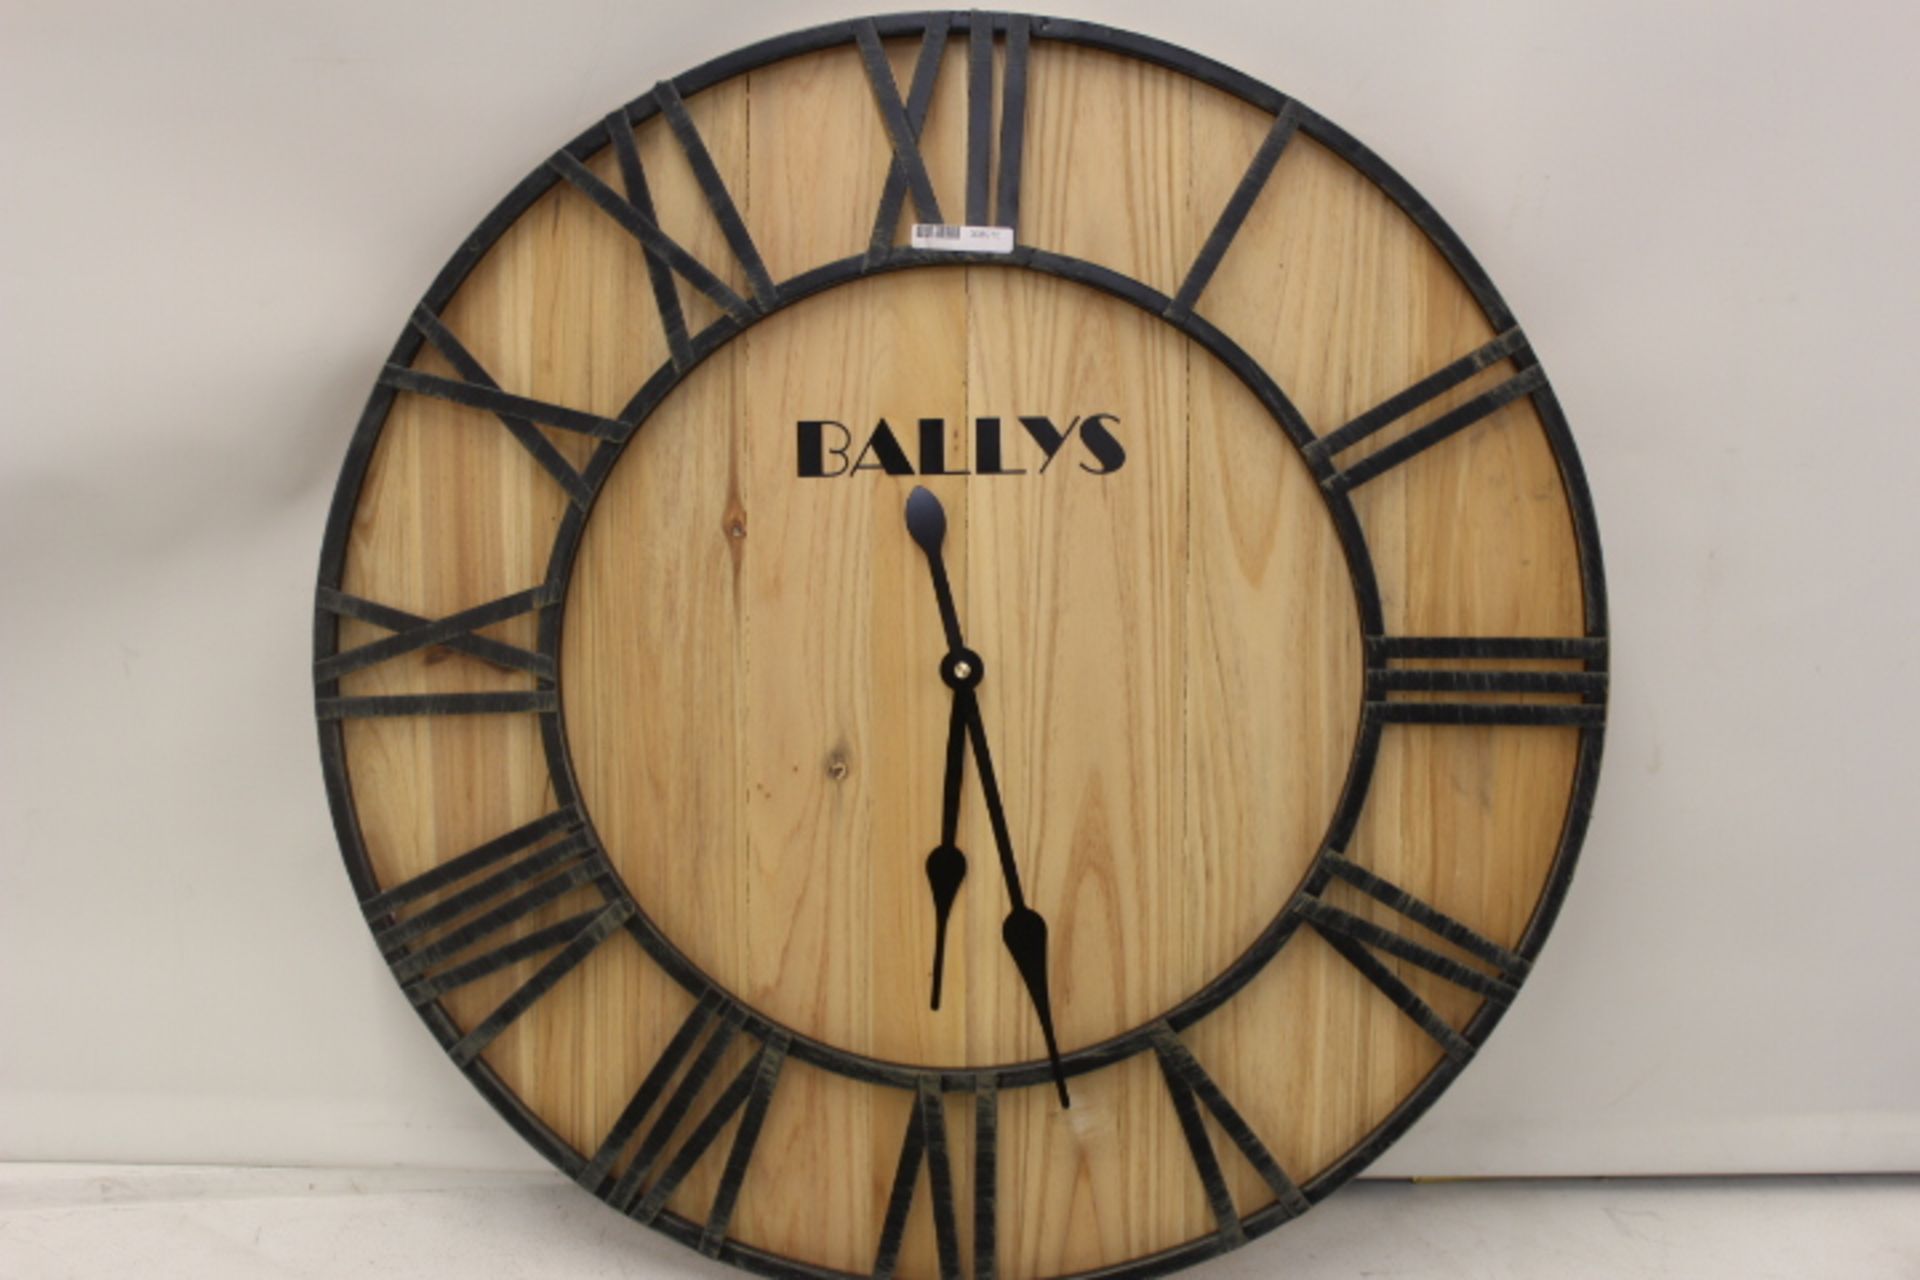 Brand New Twenty Four Inch Wood Ballys Clock